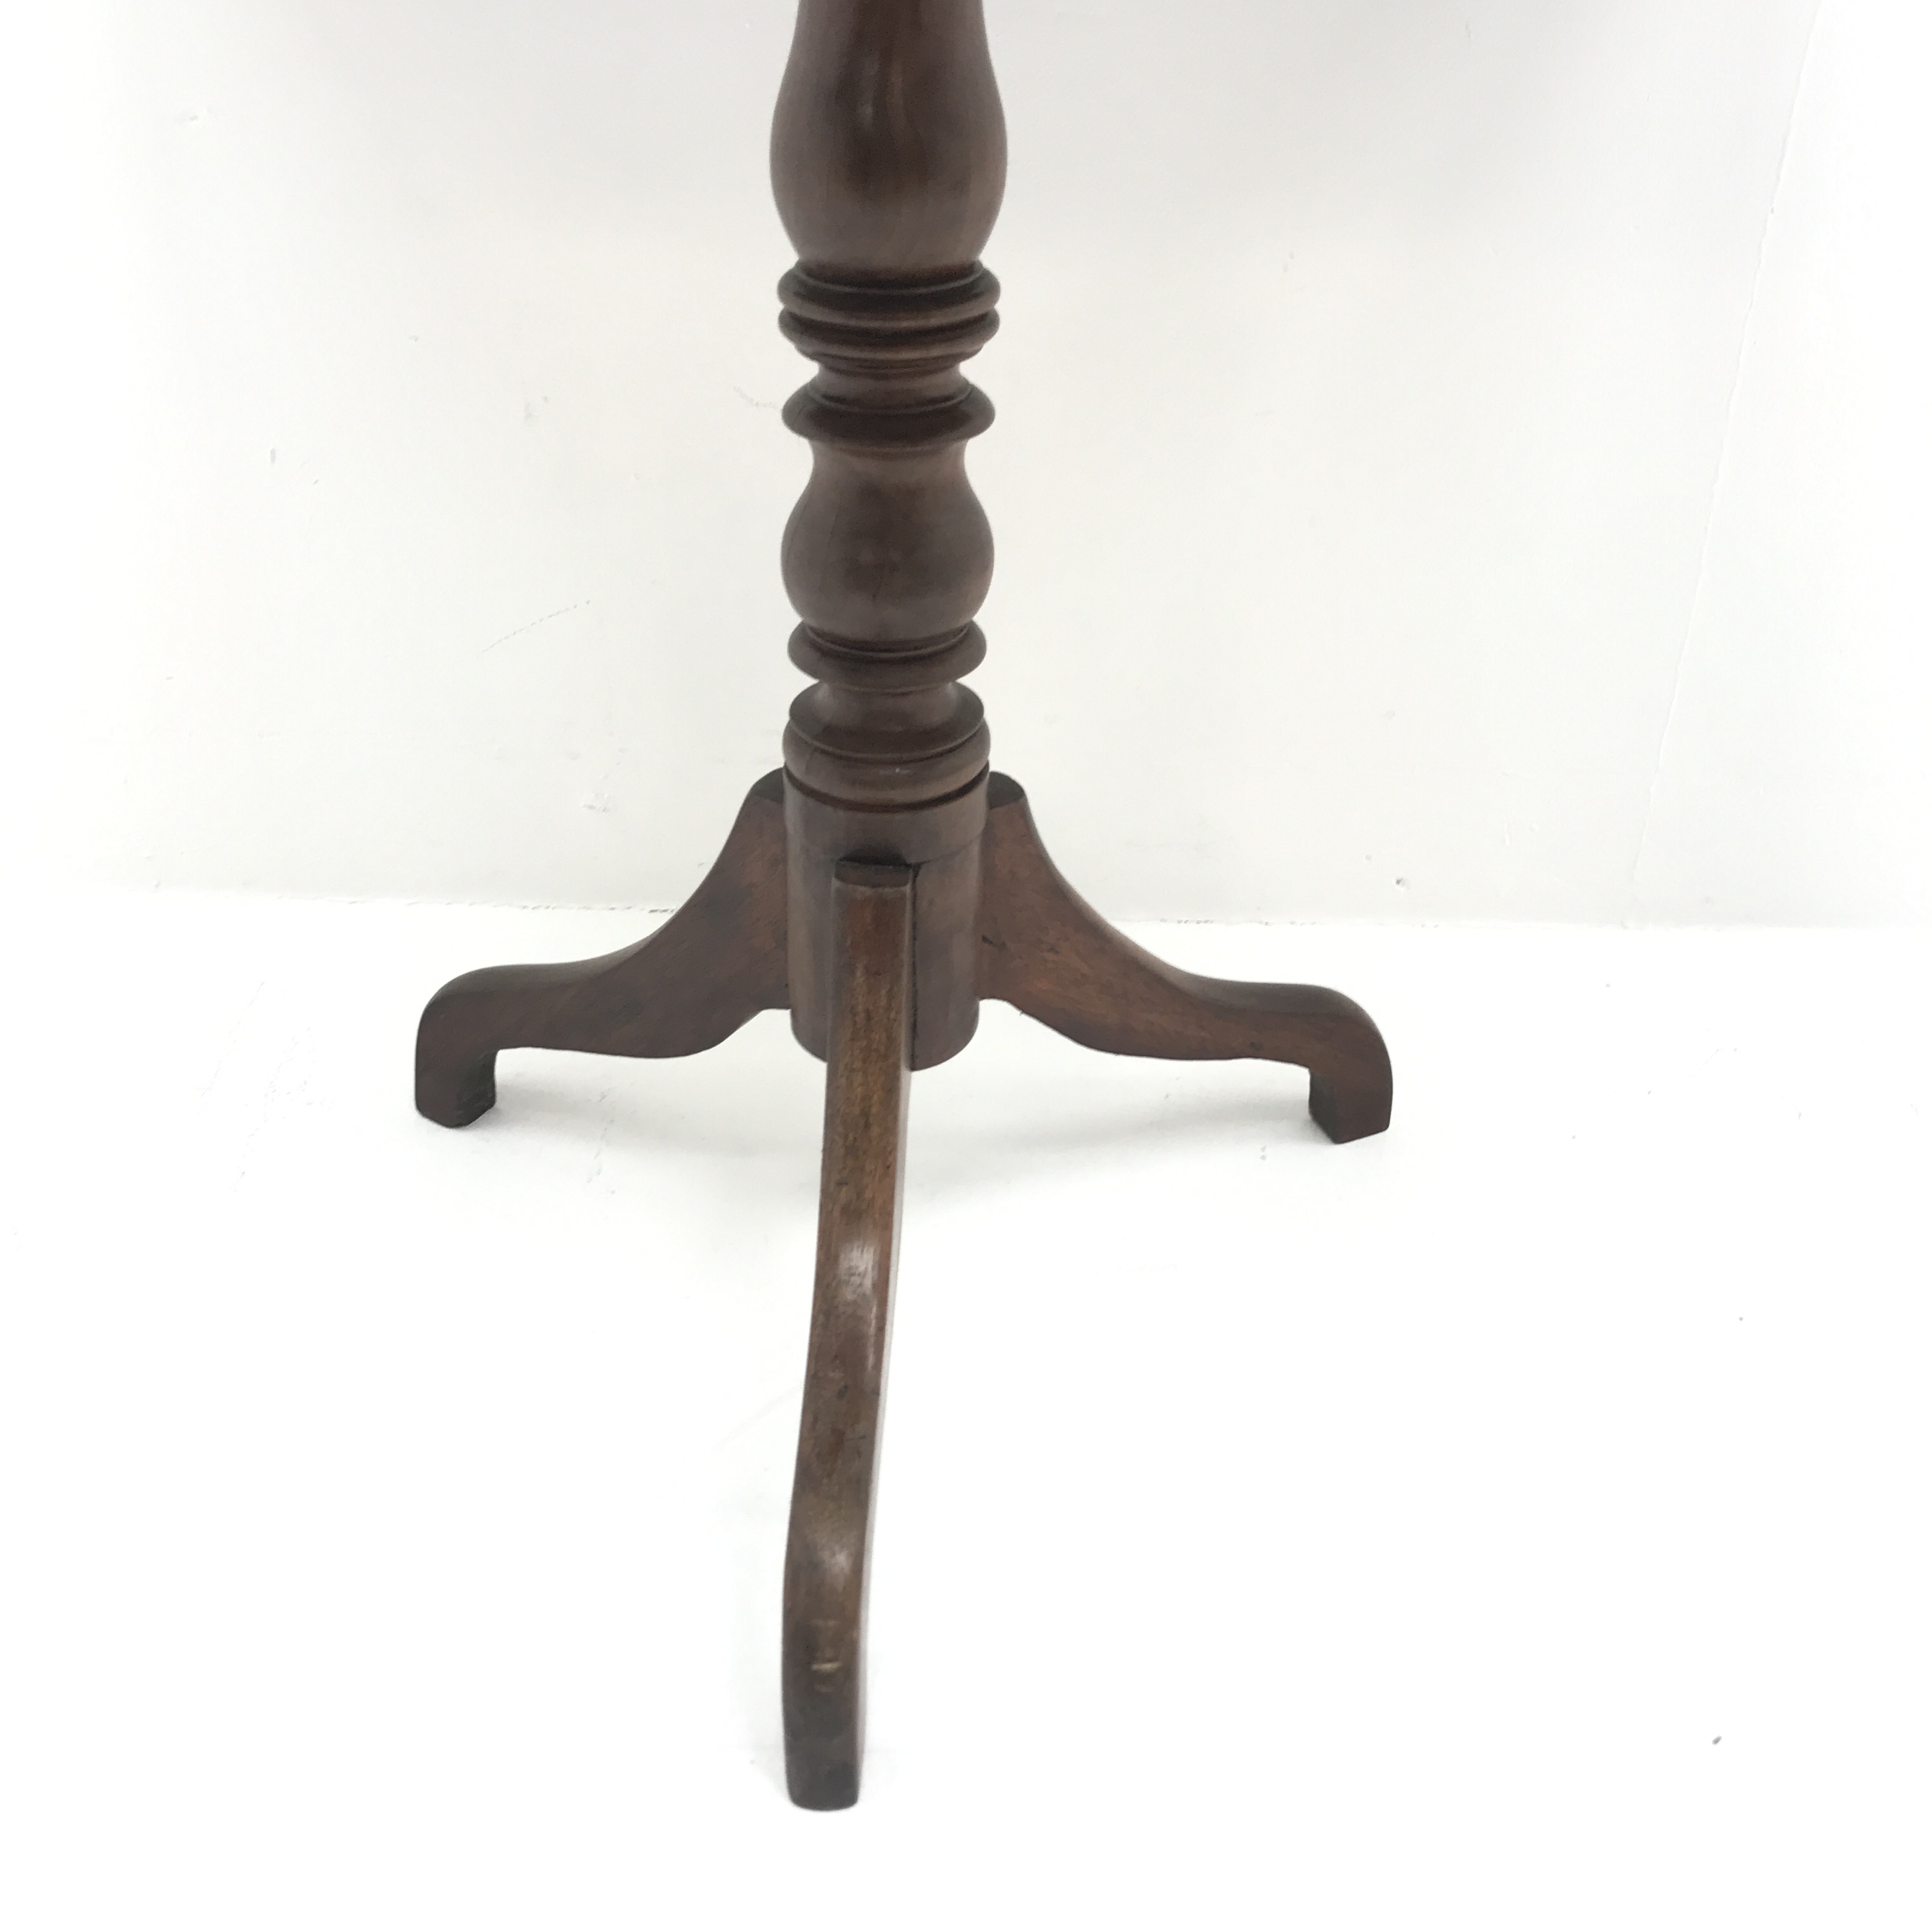 19th century mahogany tilt top table, single turned column on tripod base, W75cm, H71cm, D85cm - Image 6 of 6